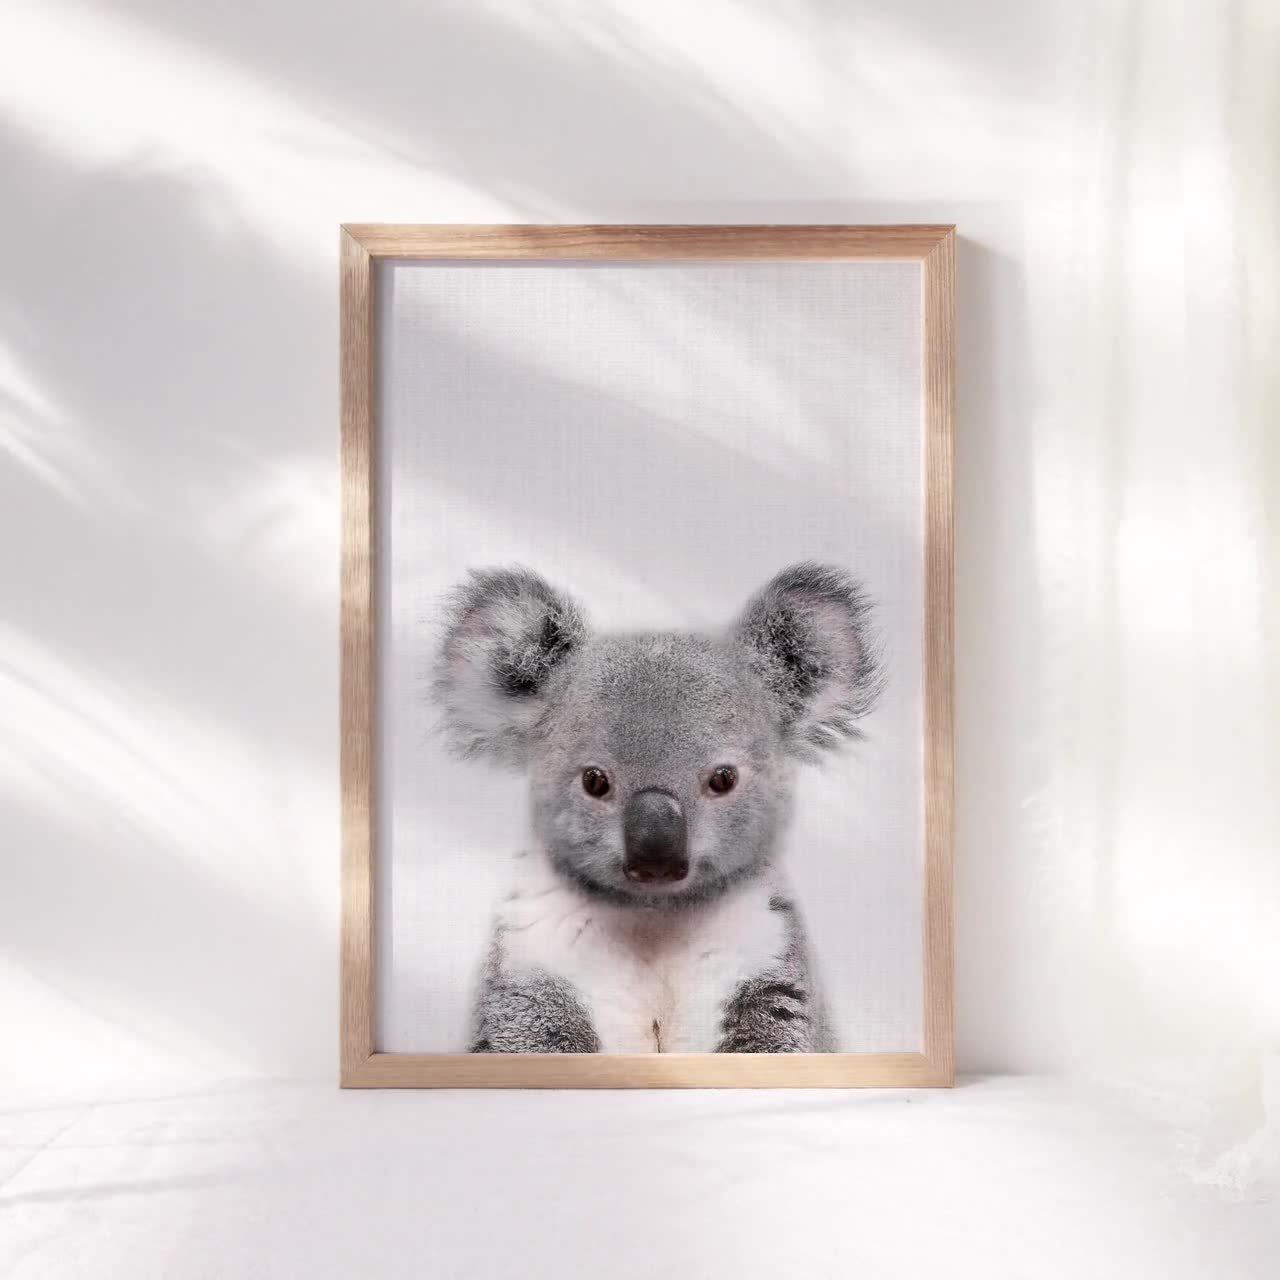 Nursery decor PRINTABLE art Nursery printables Nursery animals Koala print Animal prints Baby animals Australian Nursery wall art